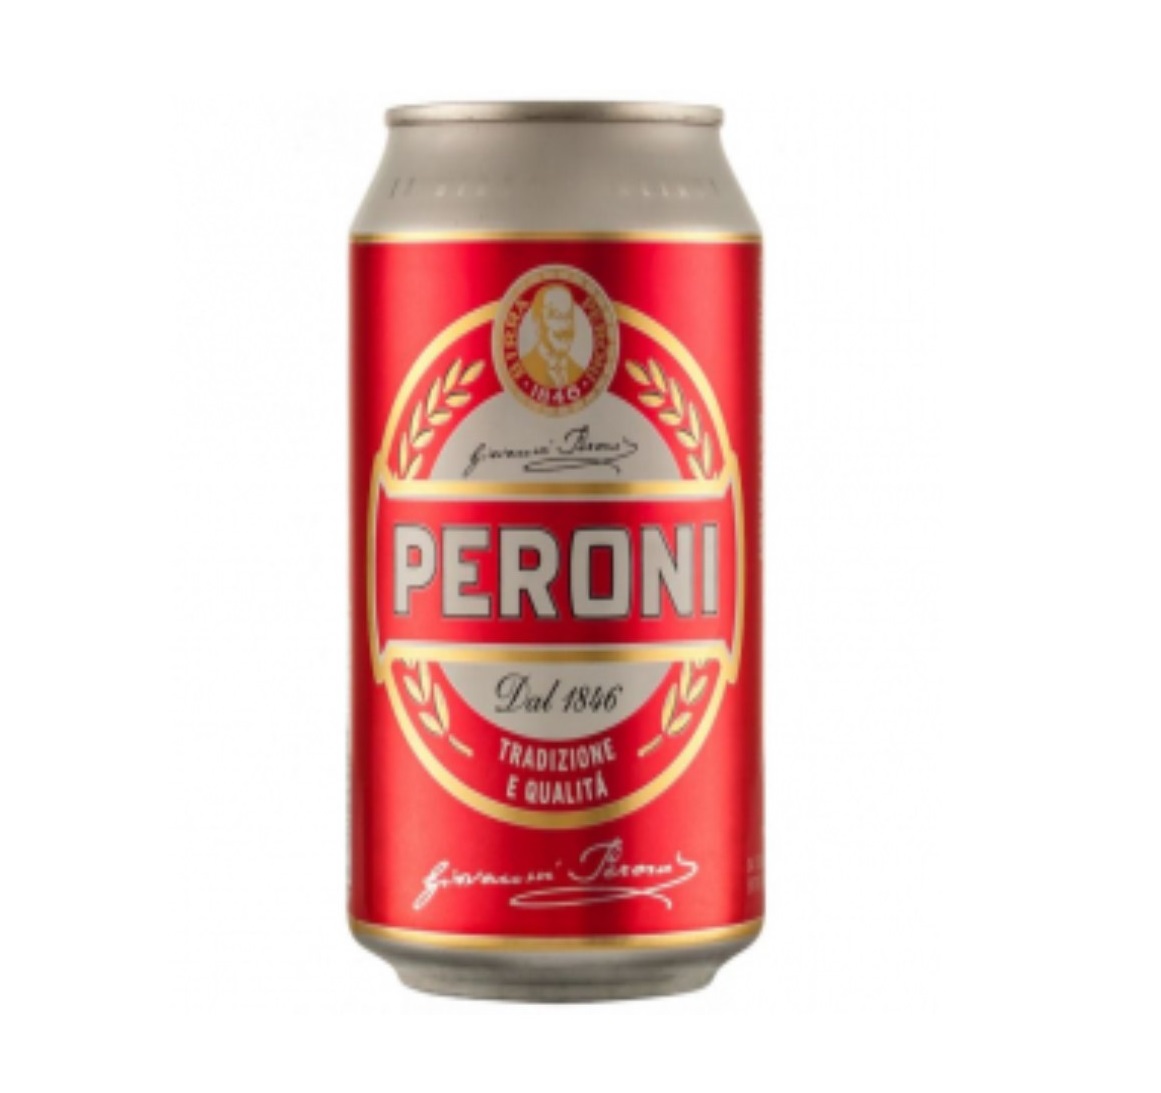 peroni-red-24x330ml-can-australian-liquor-suppliers